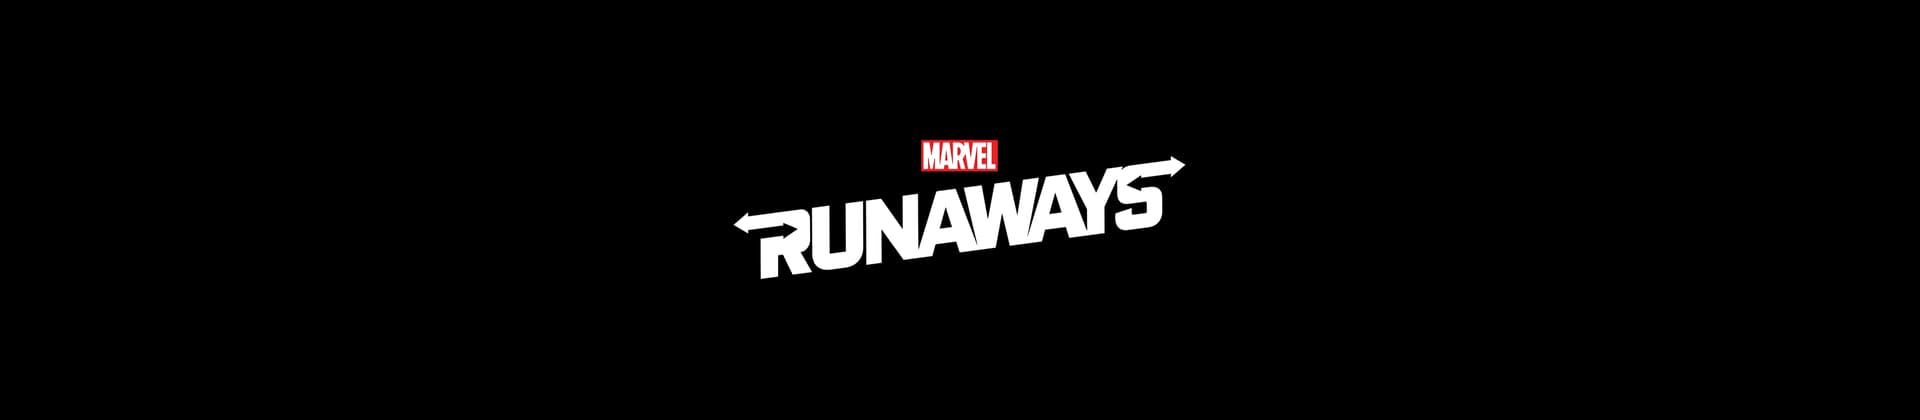 Marvel's Runaways TV Show Logo On Black